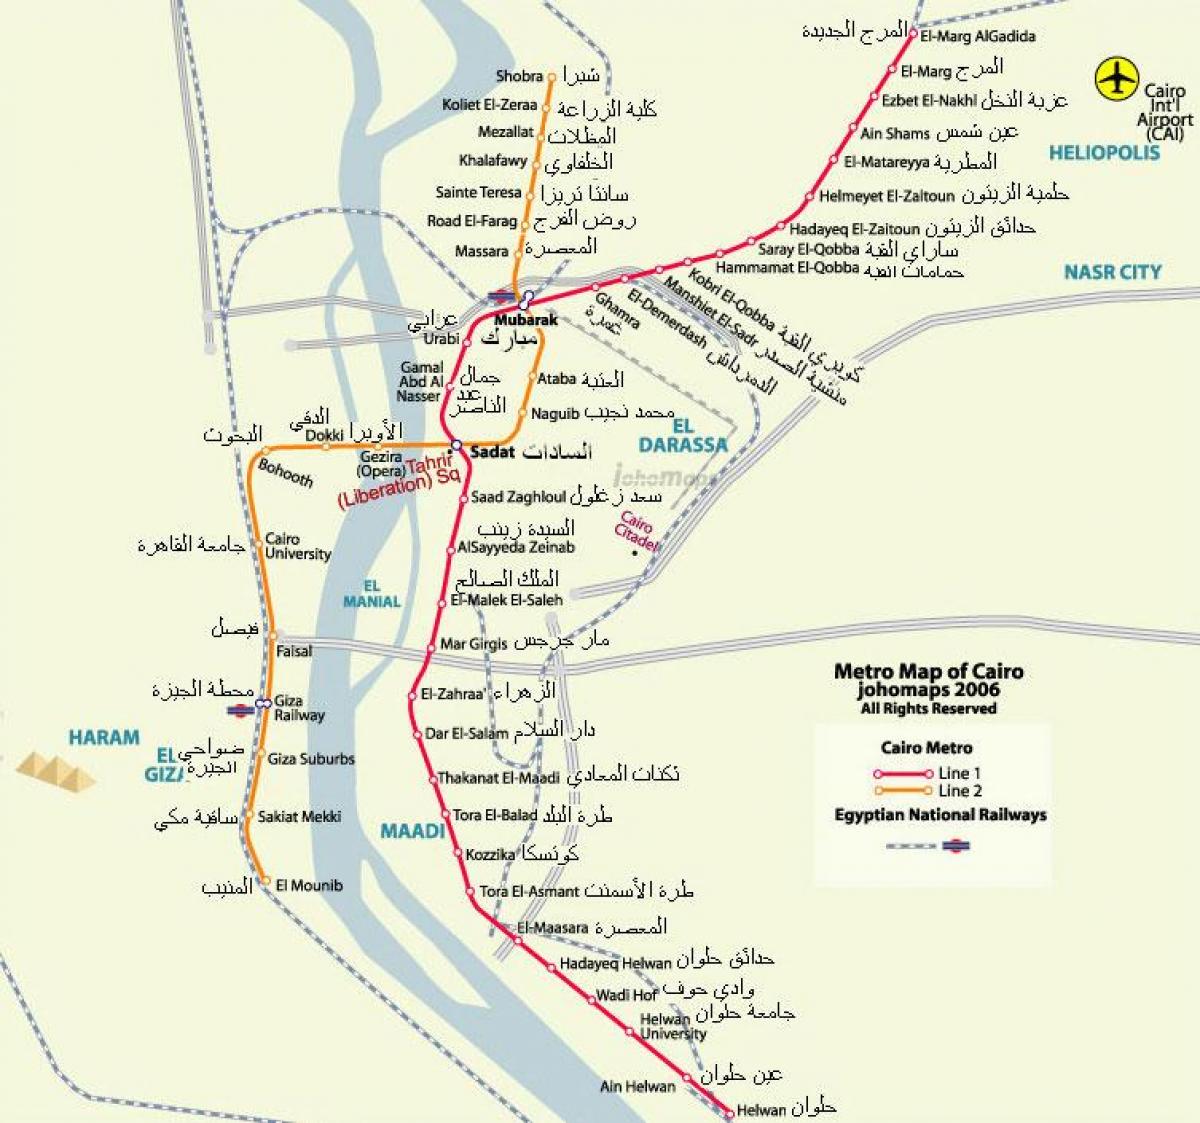 метро Каира карту 2016